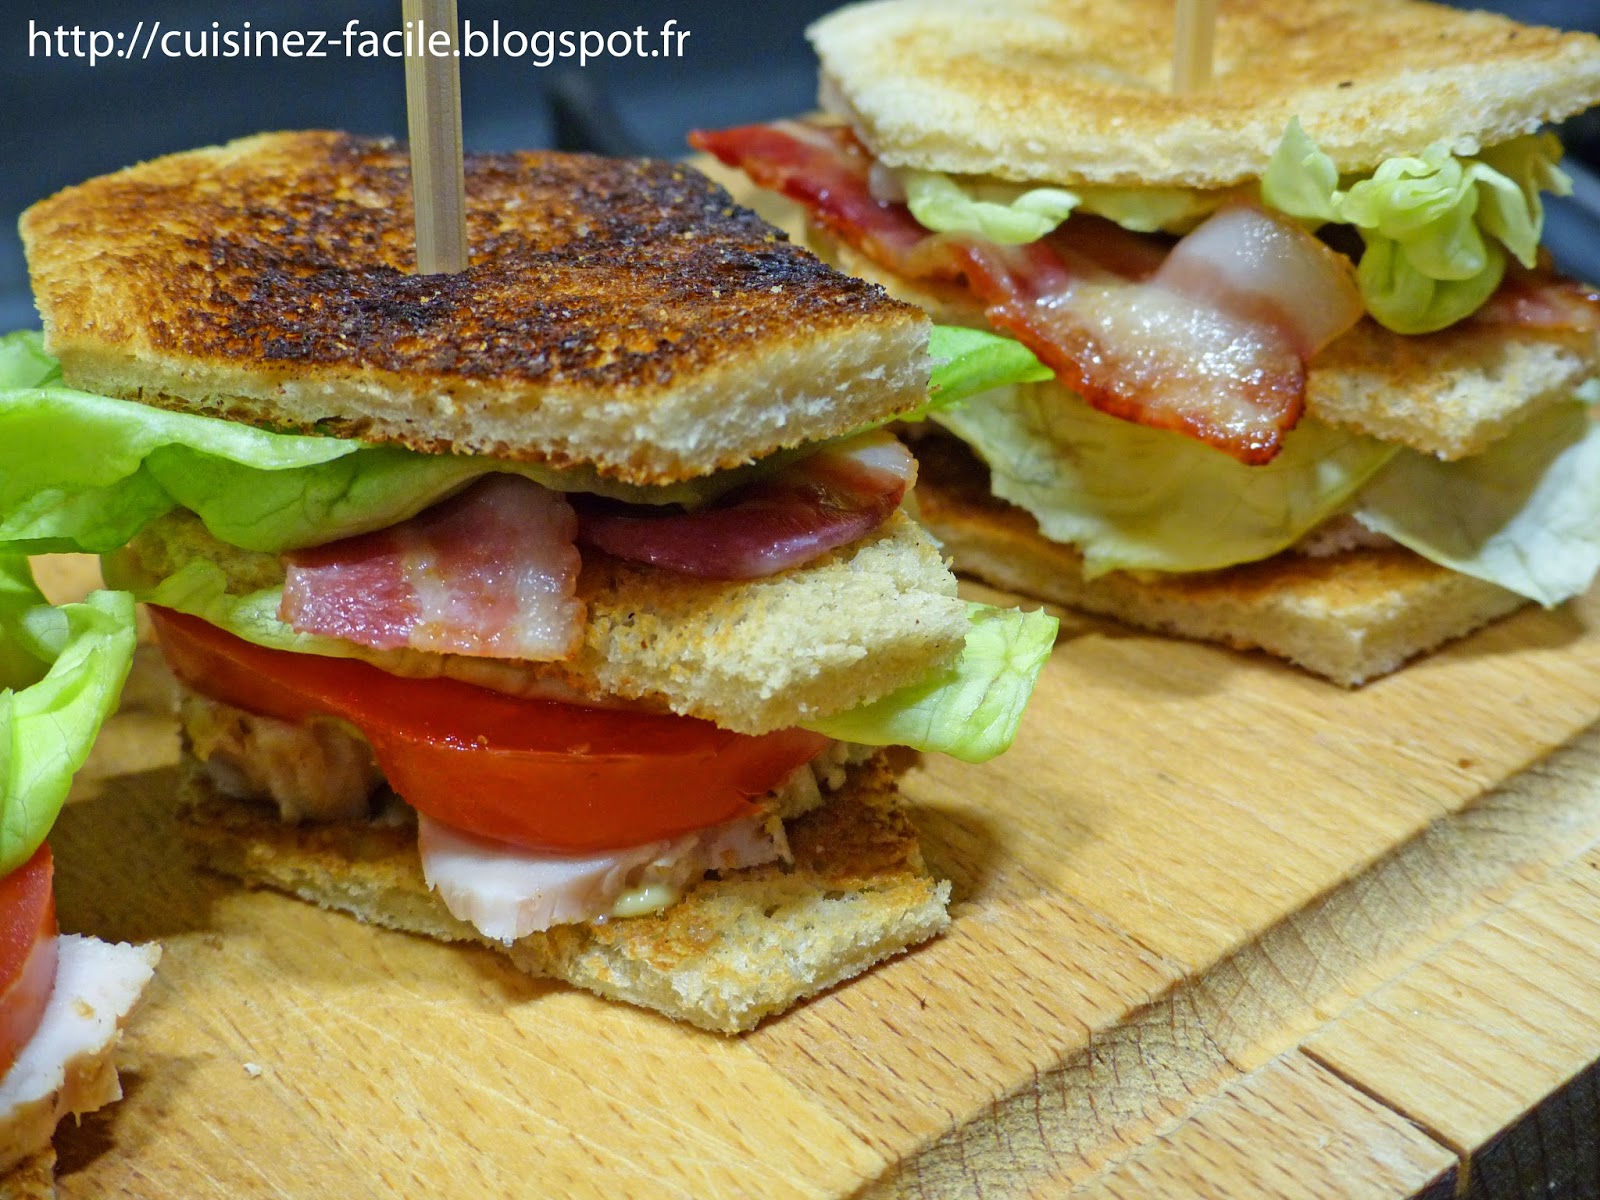 Cuisinez facile - Easy cooking: Halloween Club Sandwich Cercueil / Coffin Club Sandwich